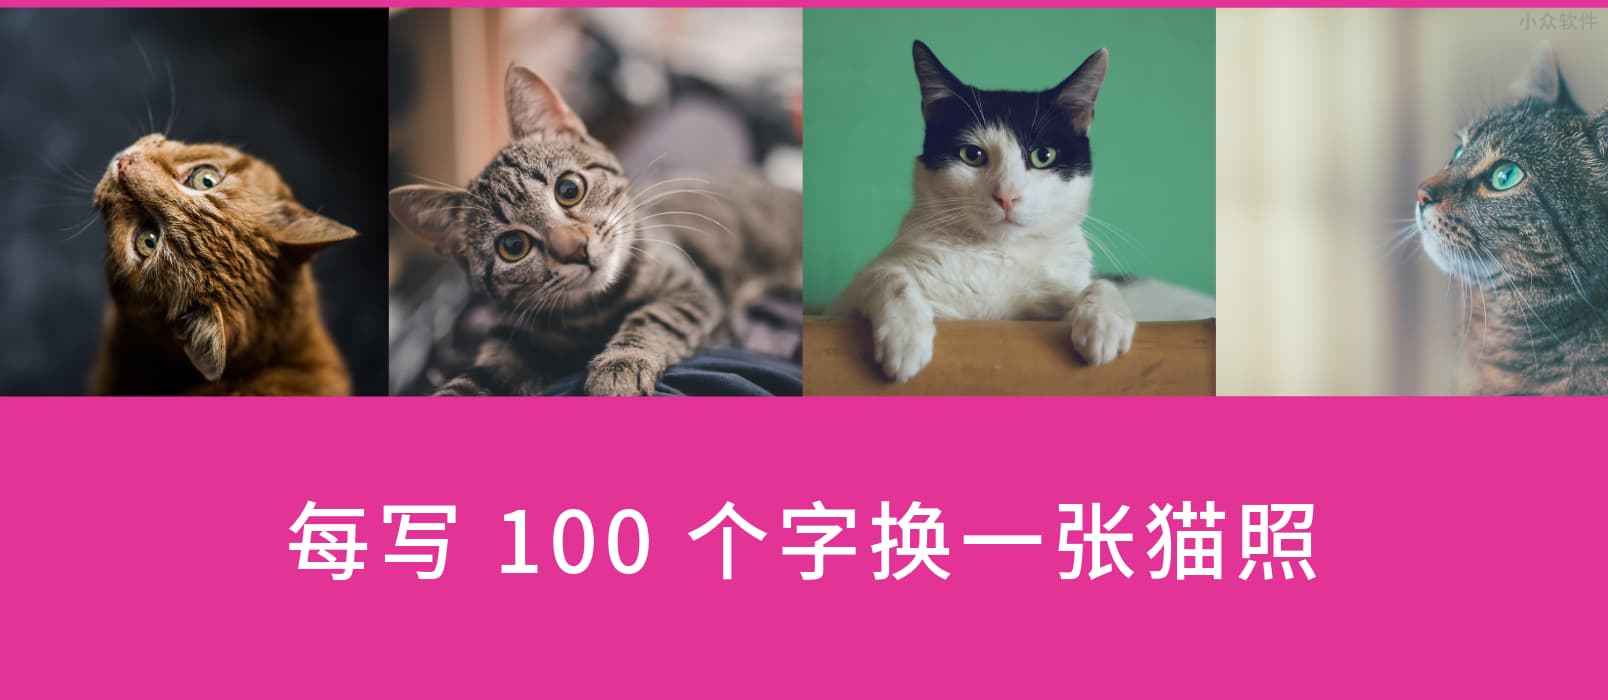 Written Kitten - 每输入100字，展示一张可爱的猫咪图片 1